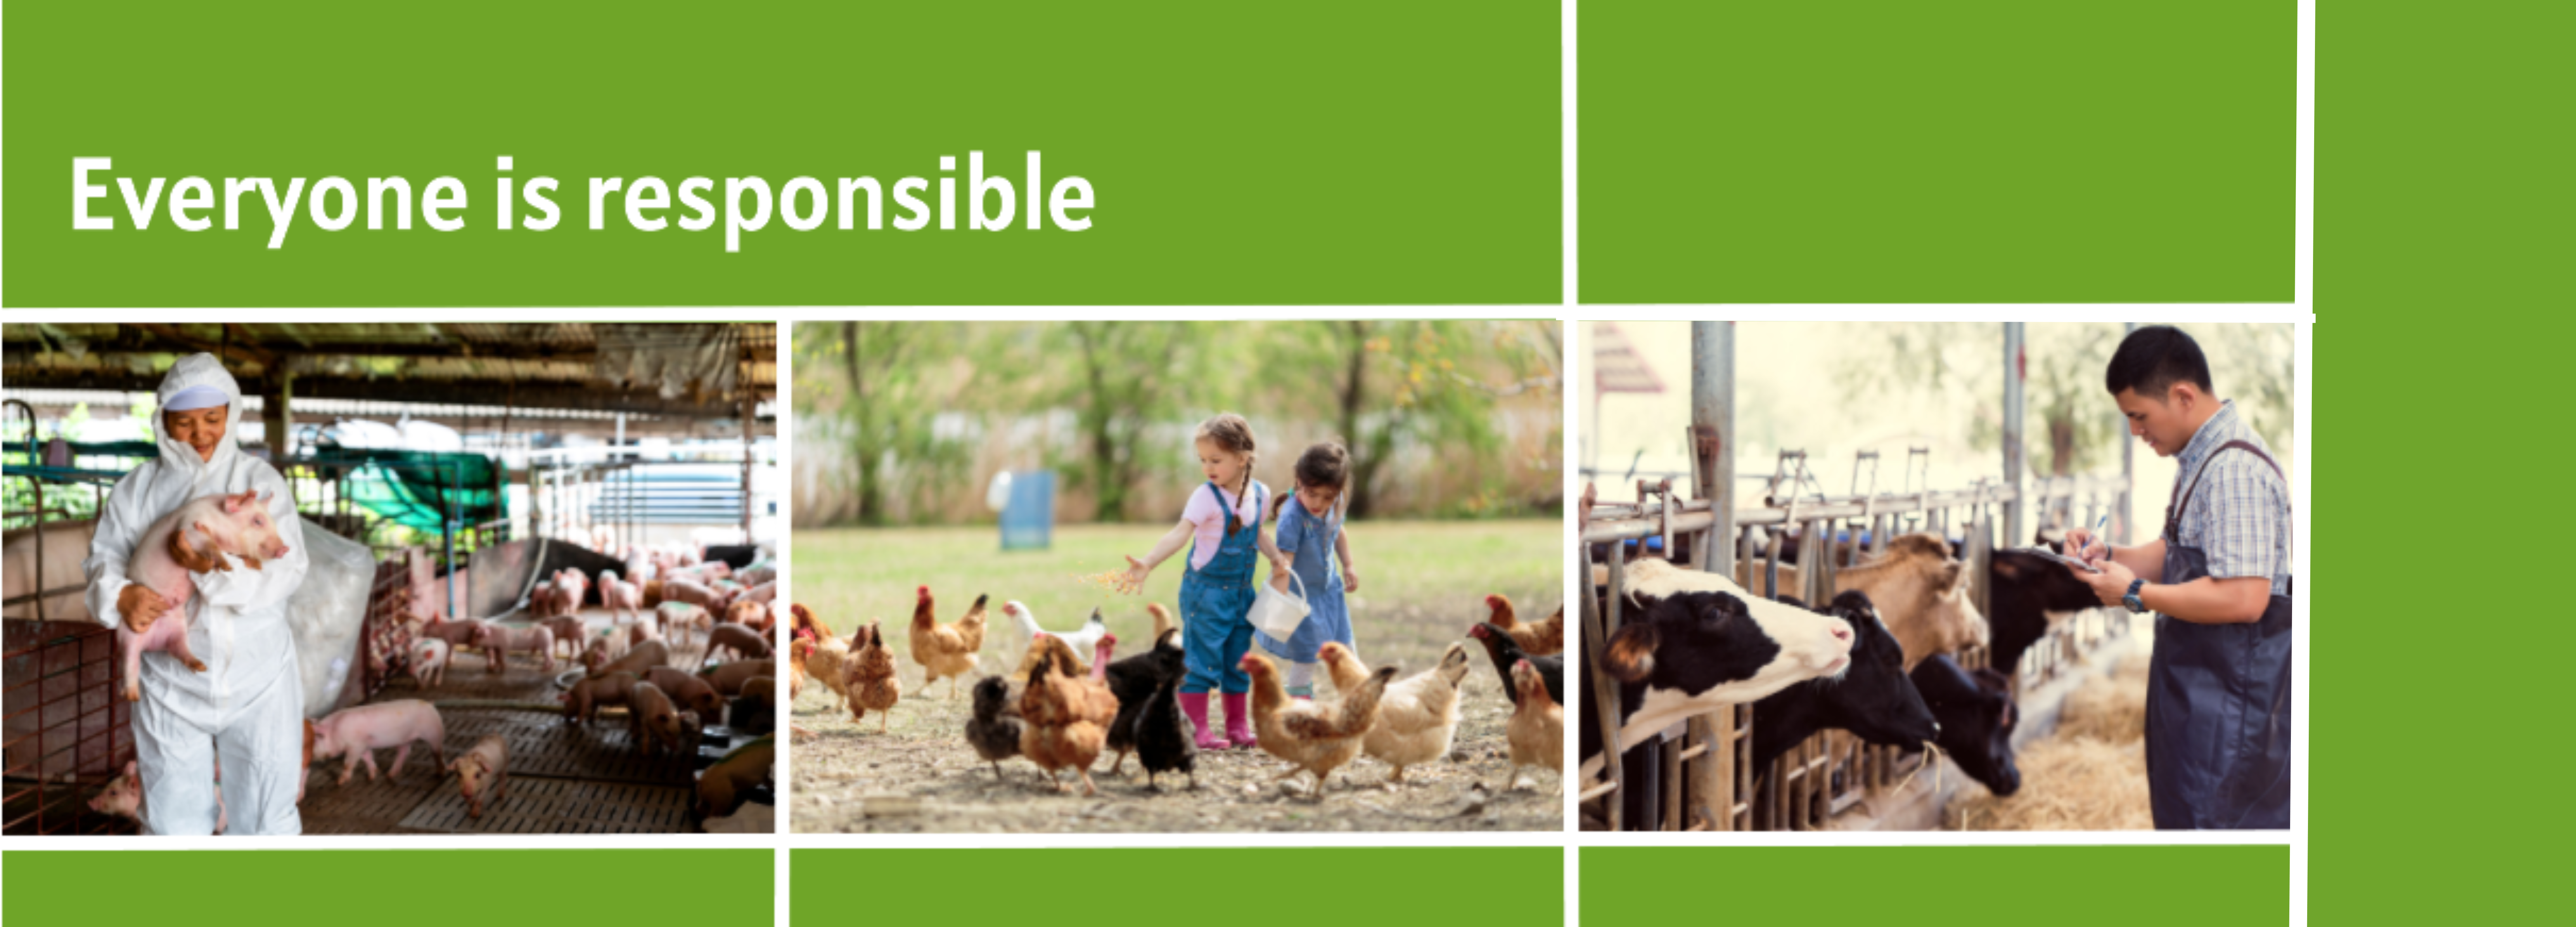 EU Platform on Animal Welfare - EU Platform on Animal Welfare